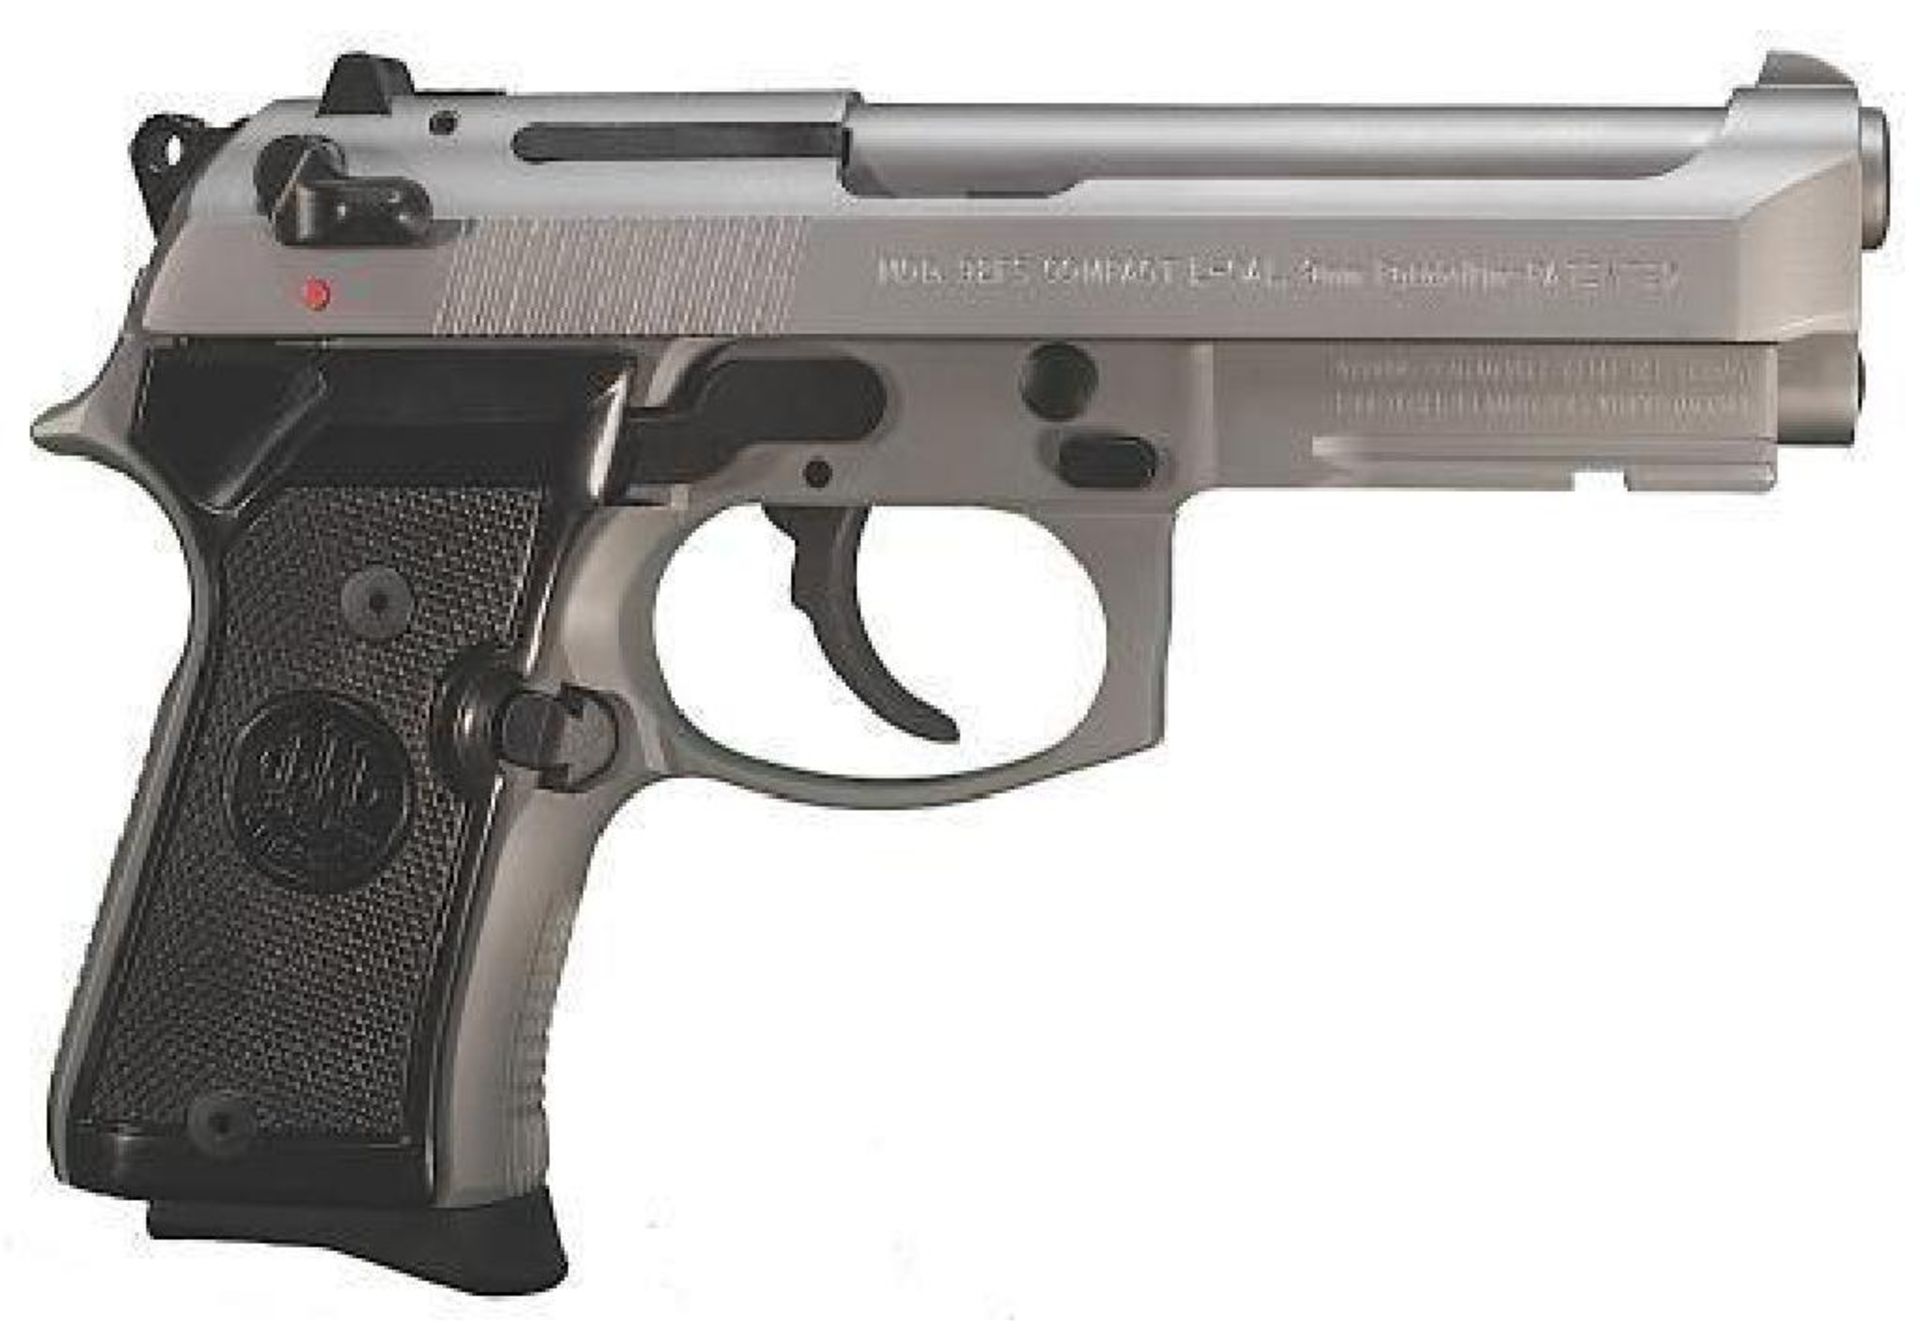 FAMILY:92 Pistol Series   MODEL:92FS Compact Inox   TYPE:Semi-Auto Pistol   ACTION:Double / Single